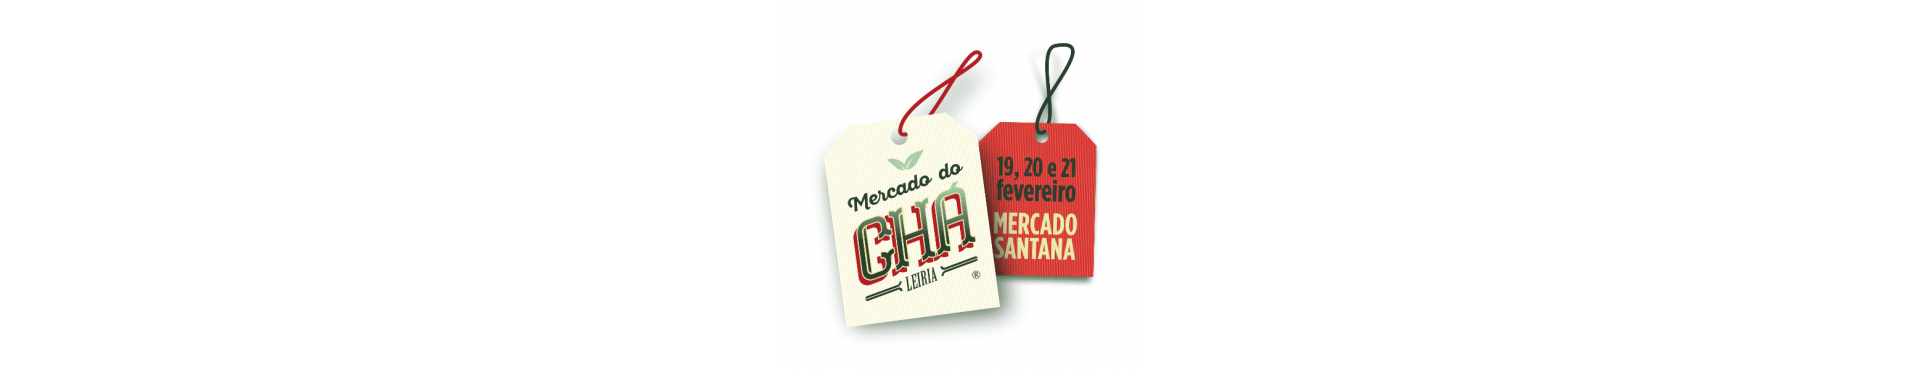 The Tea Market | Mercado do Chá ® | Specialized Tea Brand from Portugal